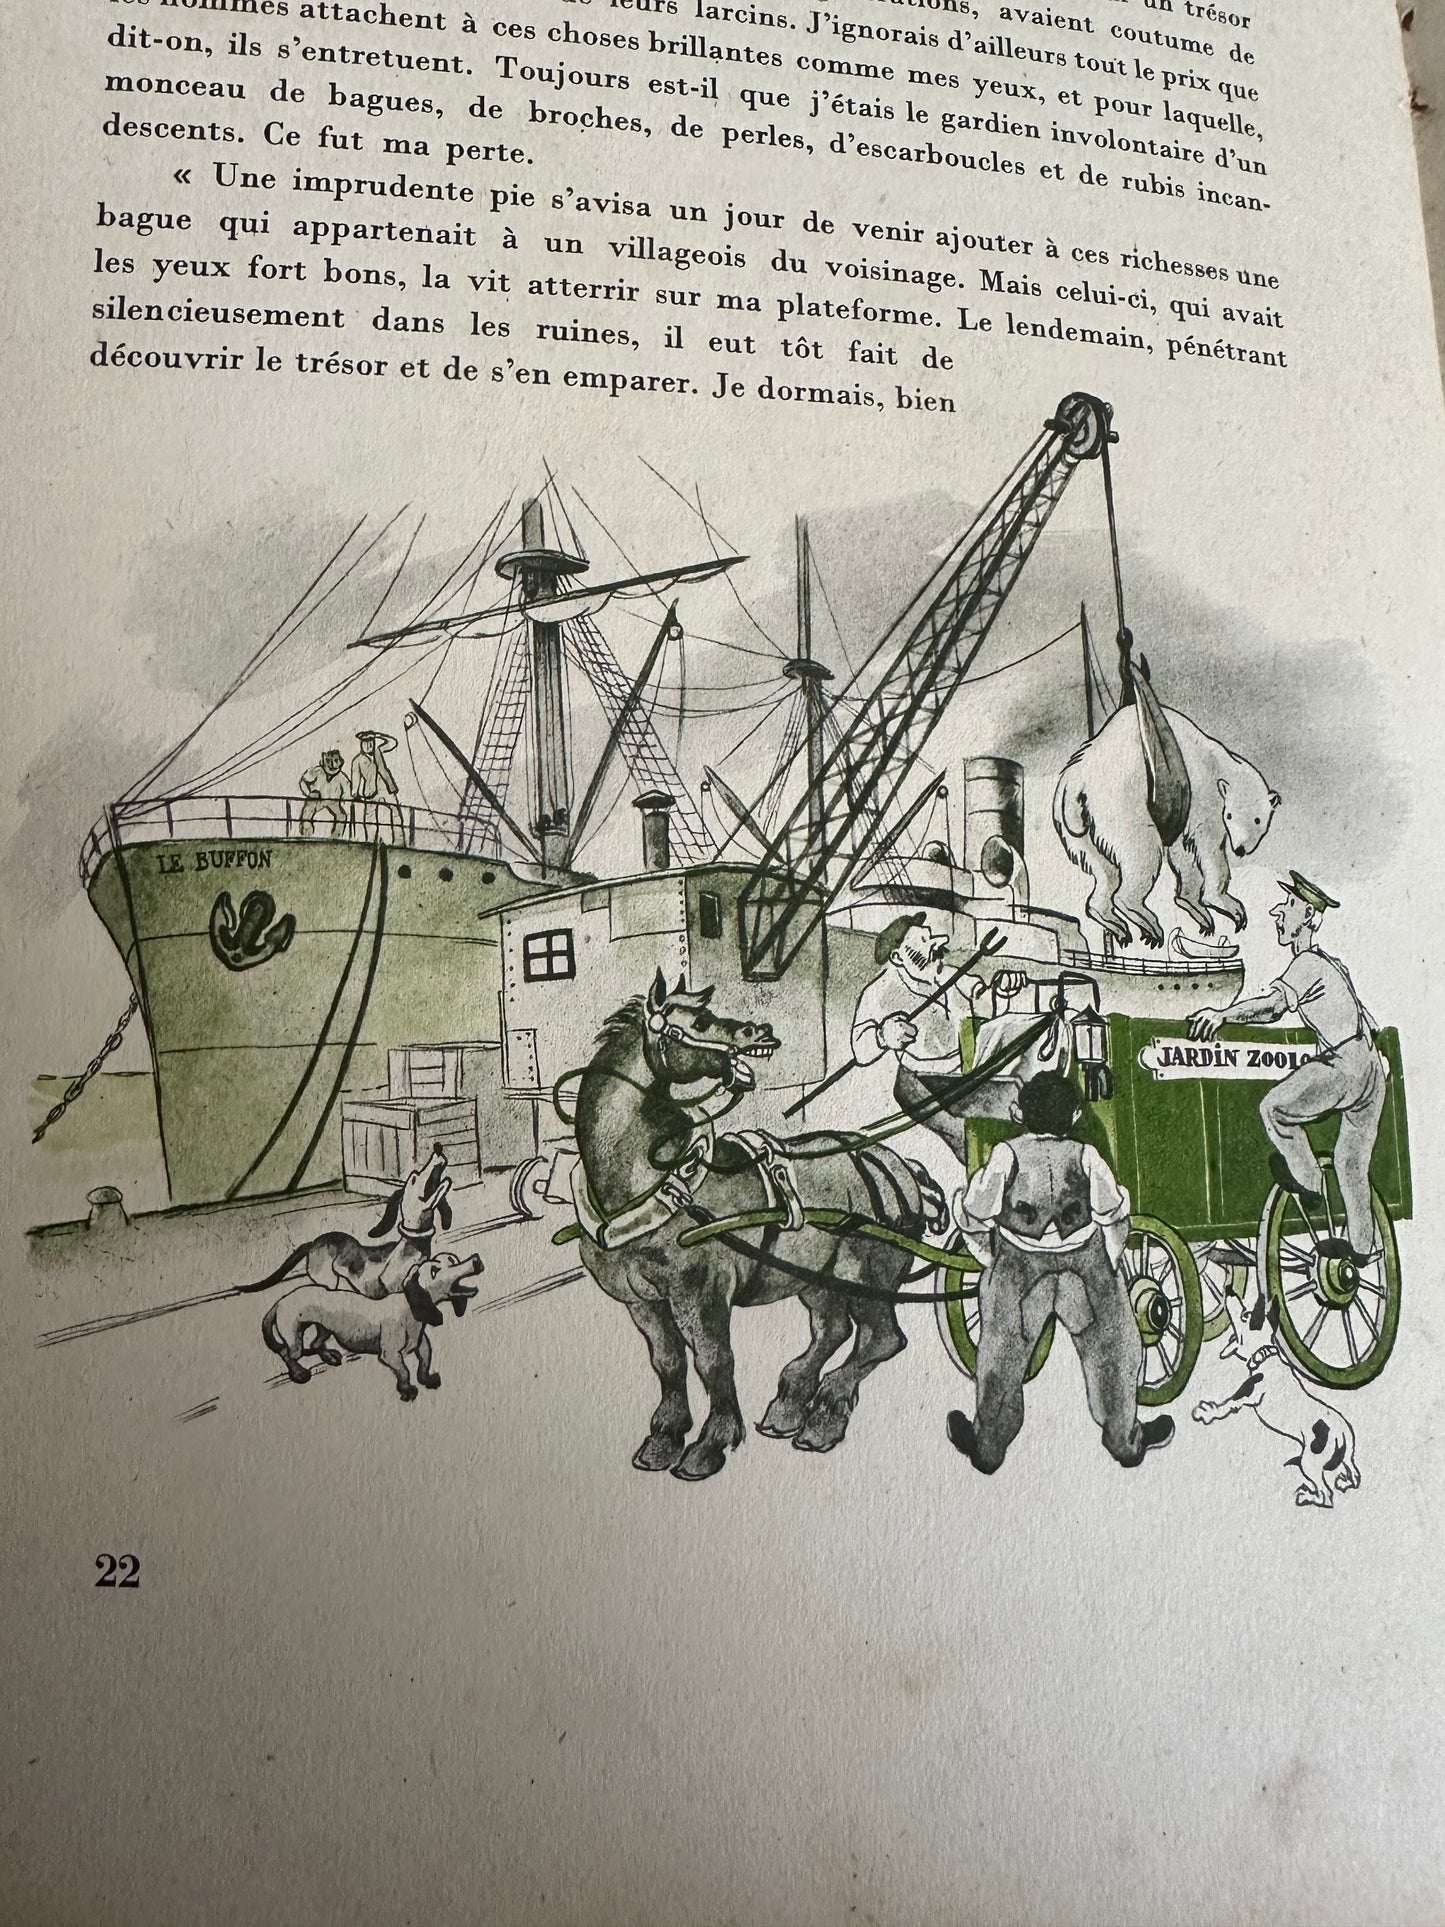 1938*1st* Nuit au Zoo(Night At Zoo) Henri Kubnick(illustrated by Jacques Liozu) Librairie Gründ Publish